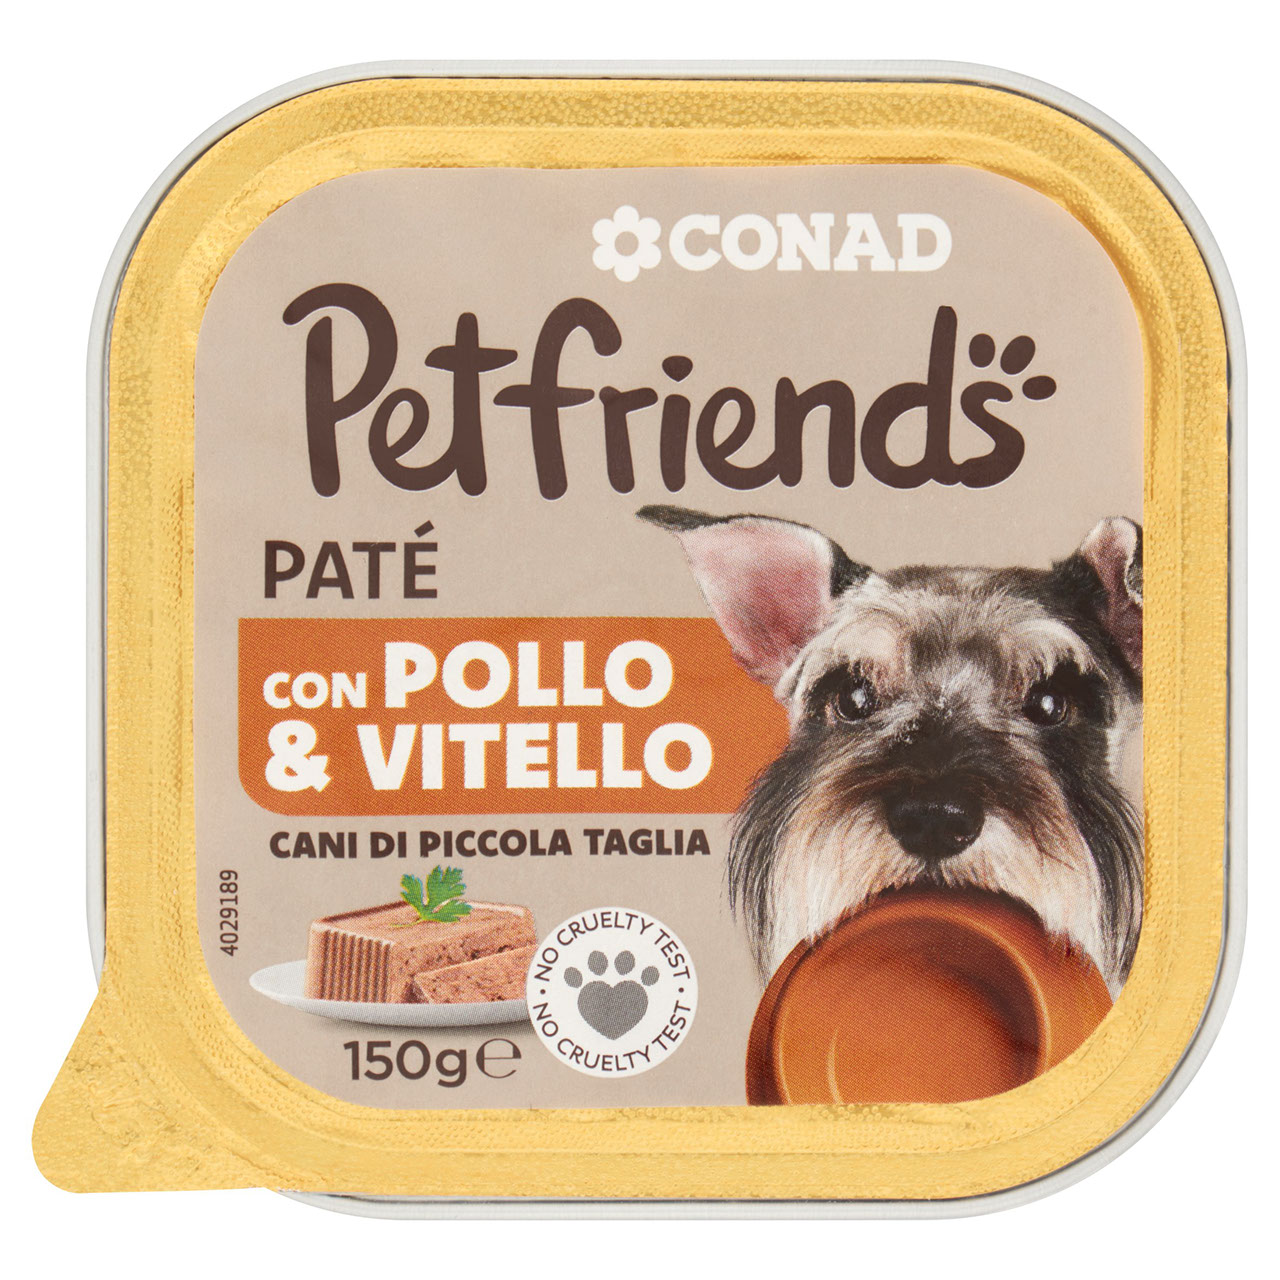 Petfriends Pat� Pollo & Vitello 150g Conad online